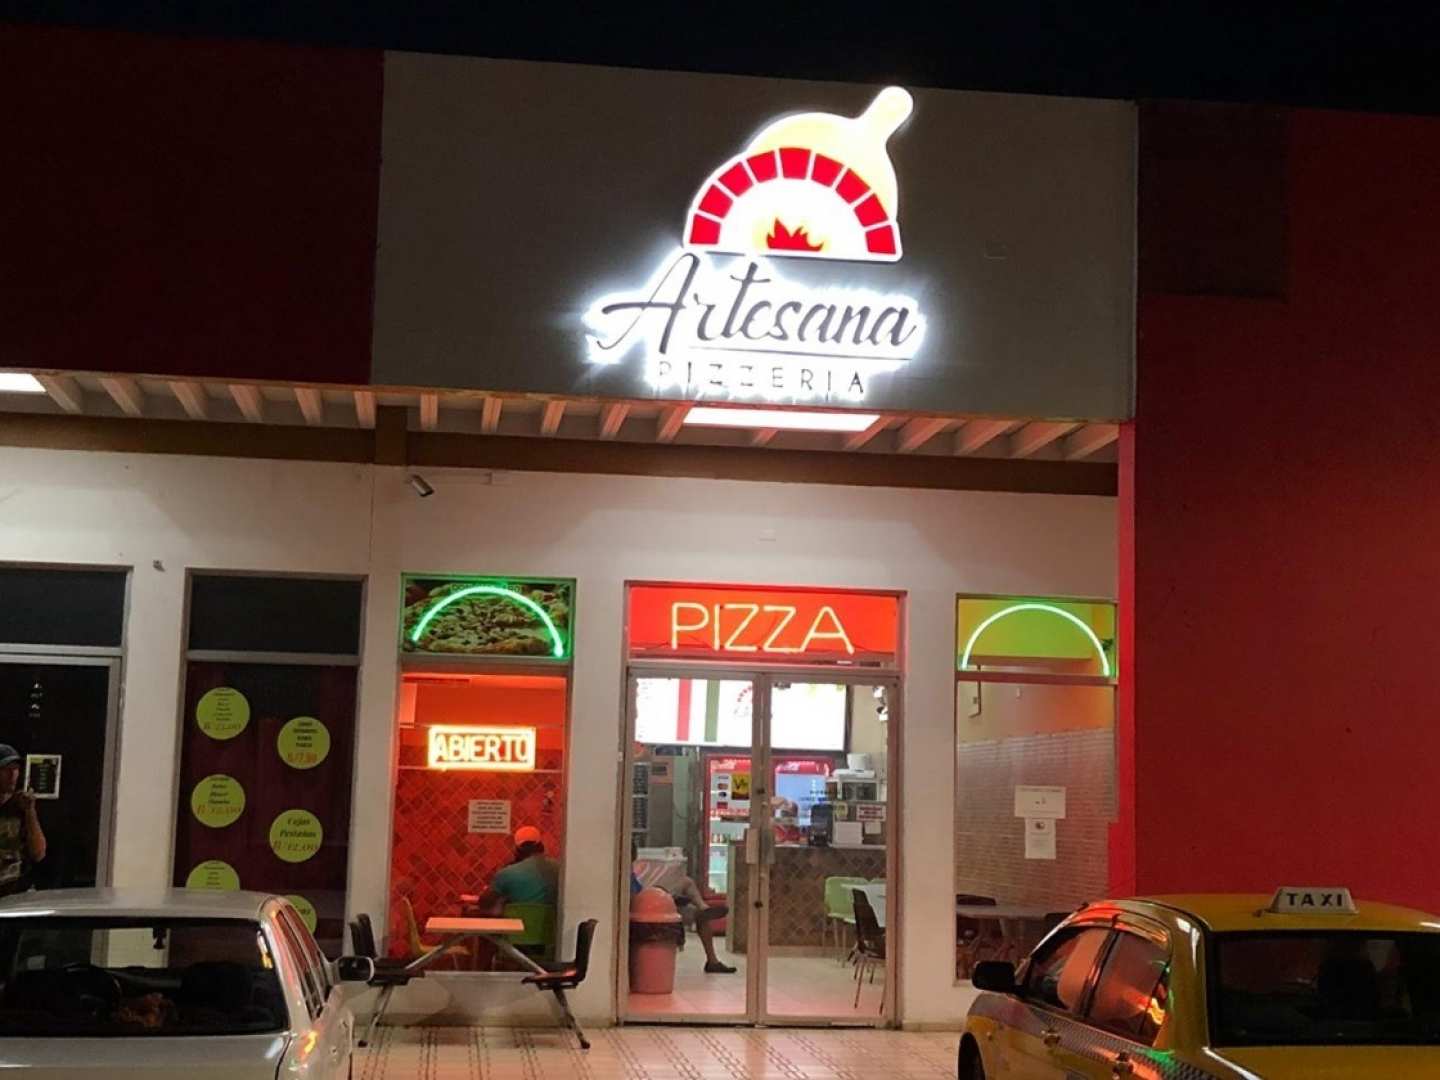 Artesana Pizzeria